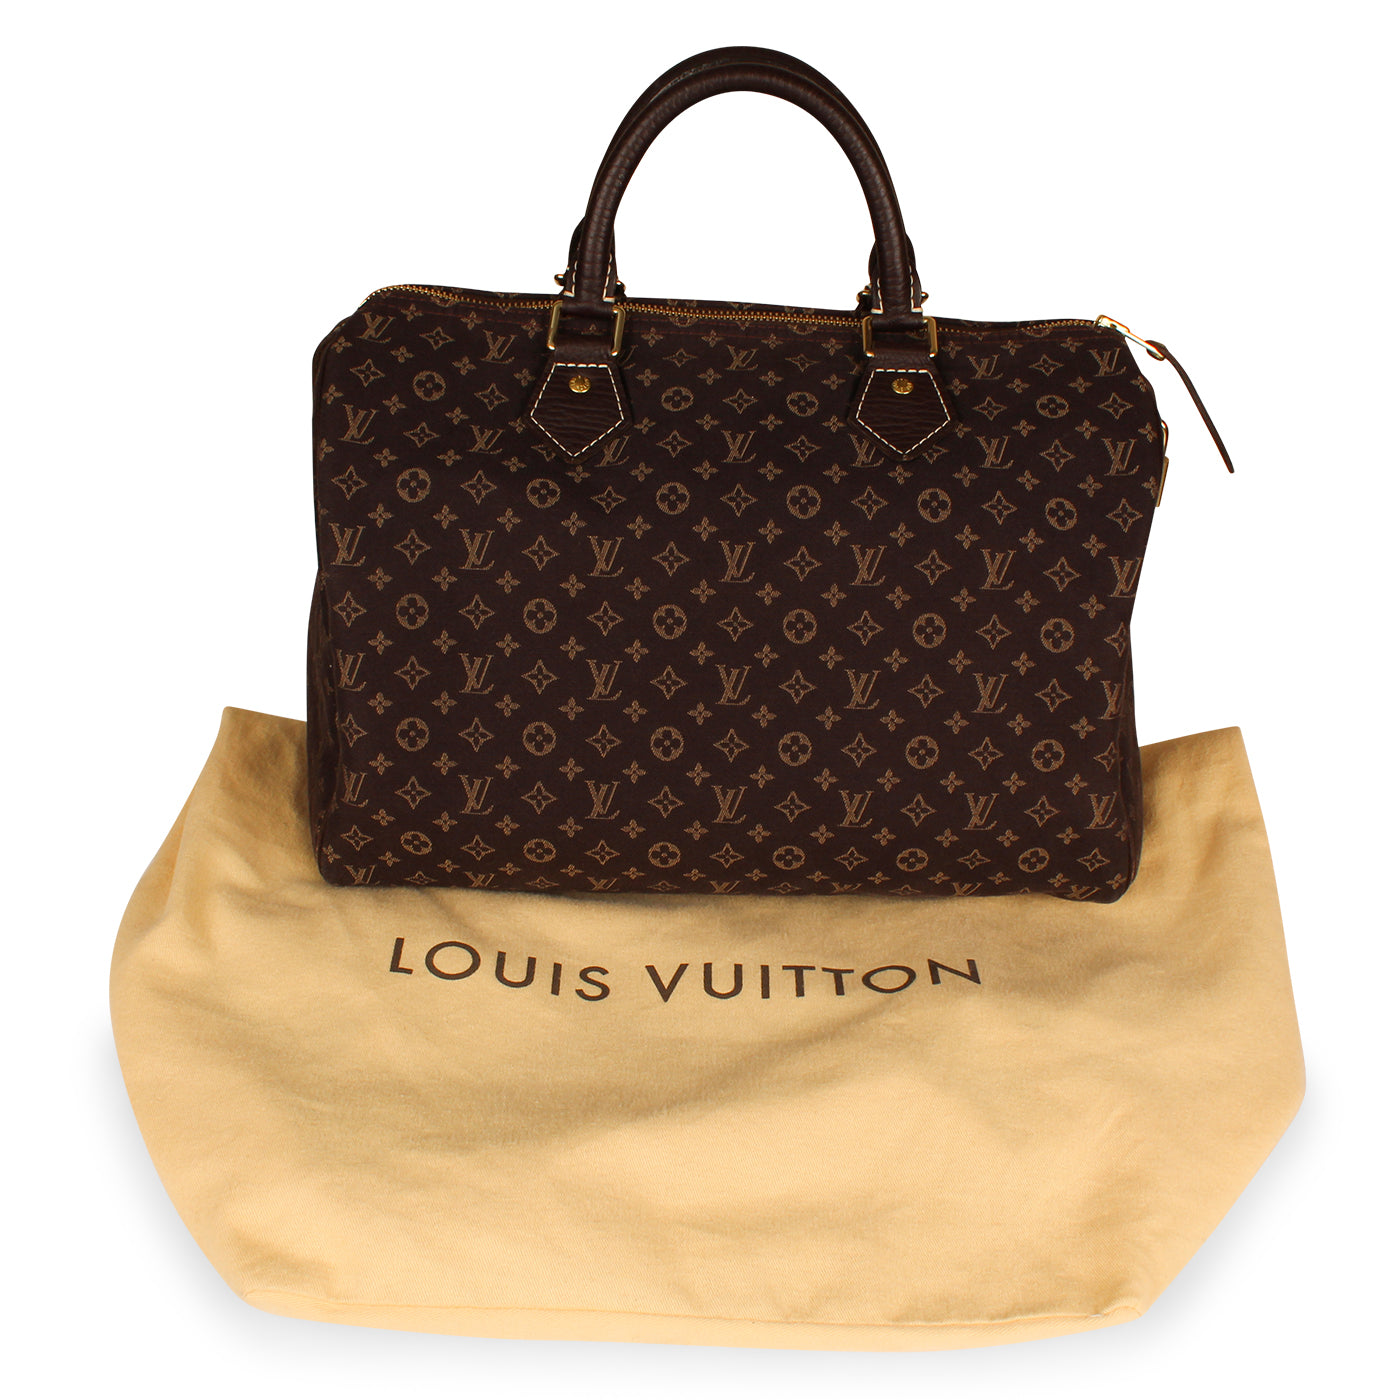 LOUIS VUITTON. Speedy bag, in monogram fabric and navy b…